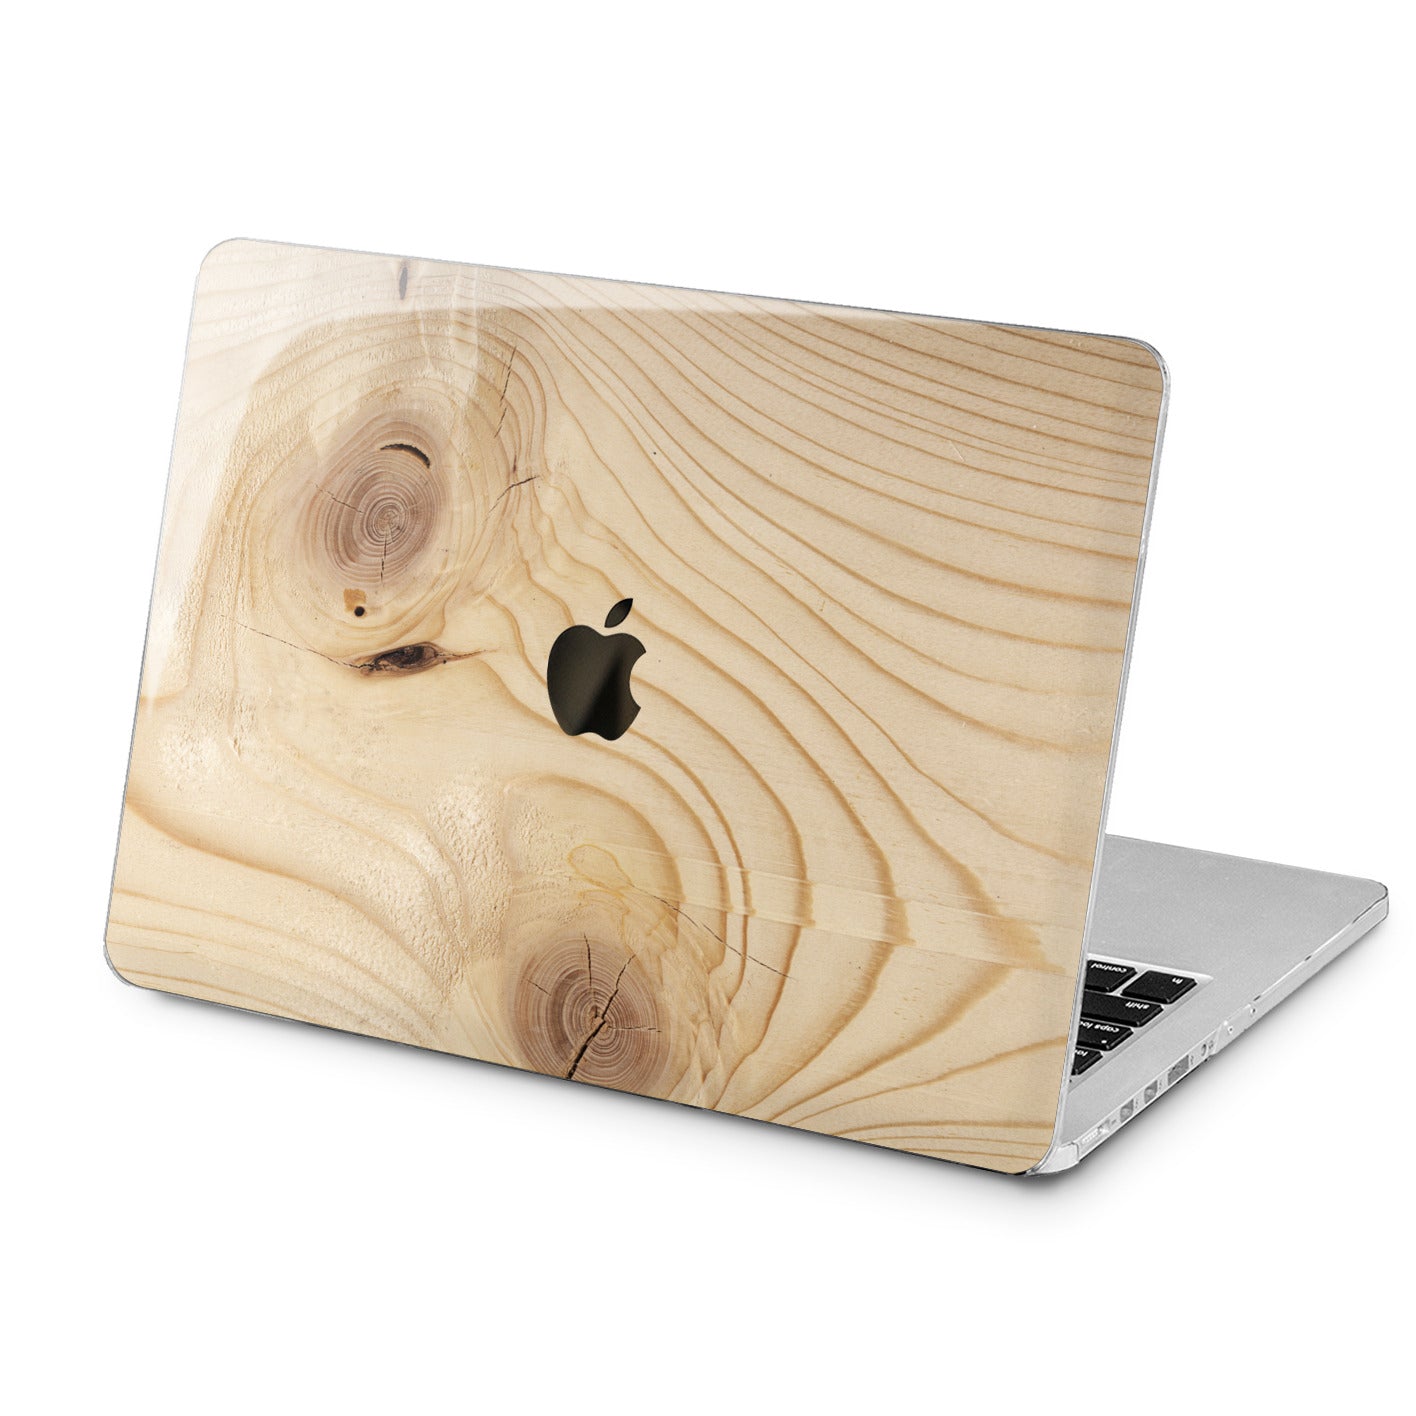 Lex Altern Lex Altern Pine Texture Case for your Laptop Apple Macbook.